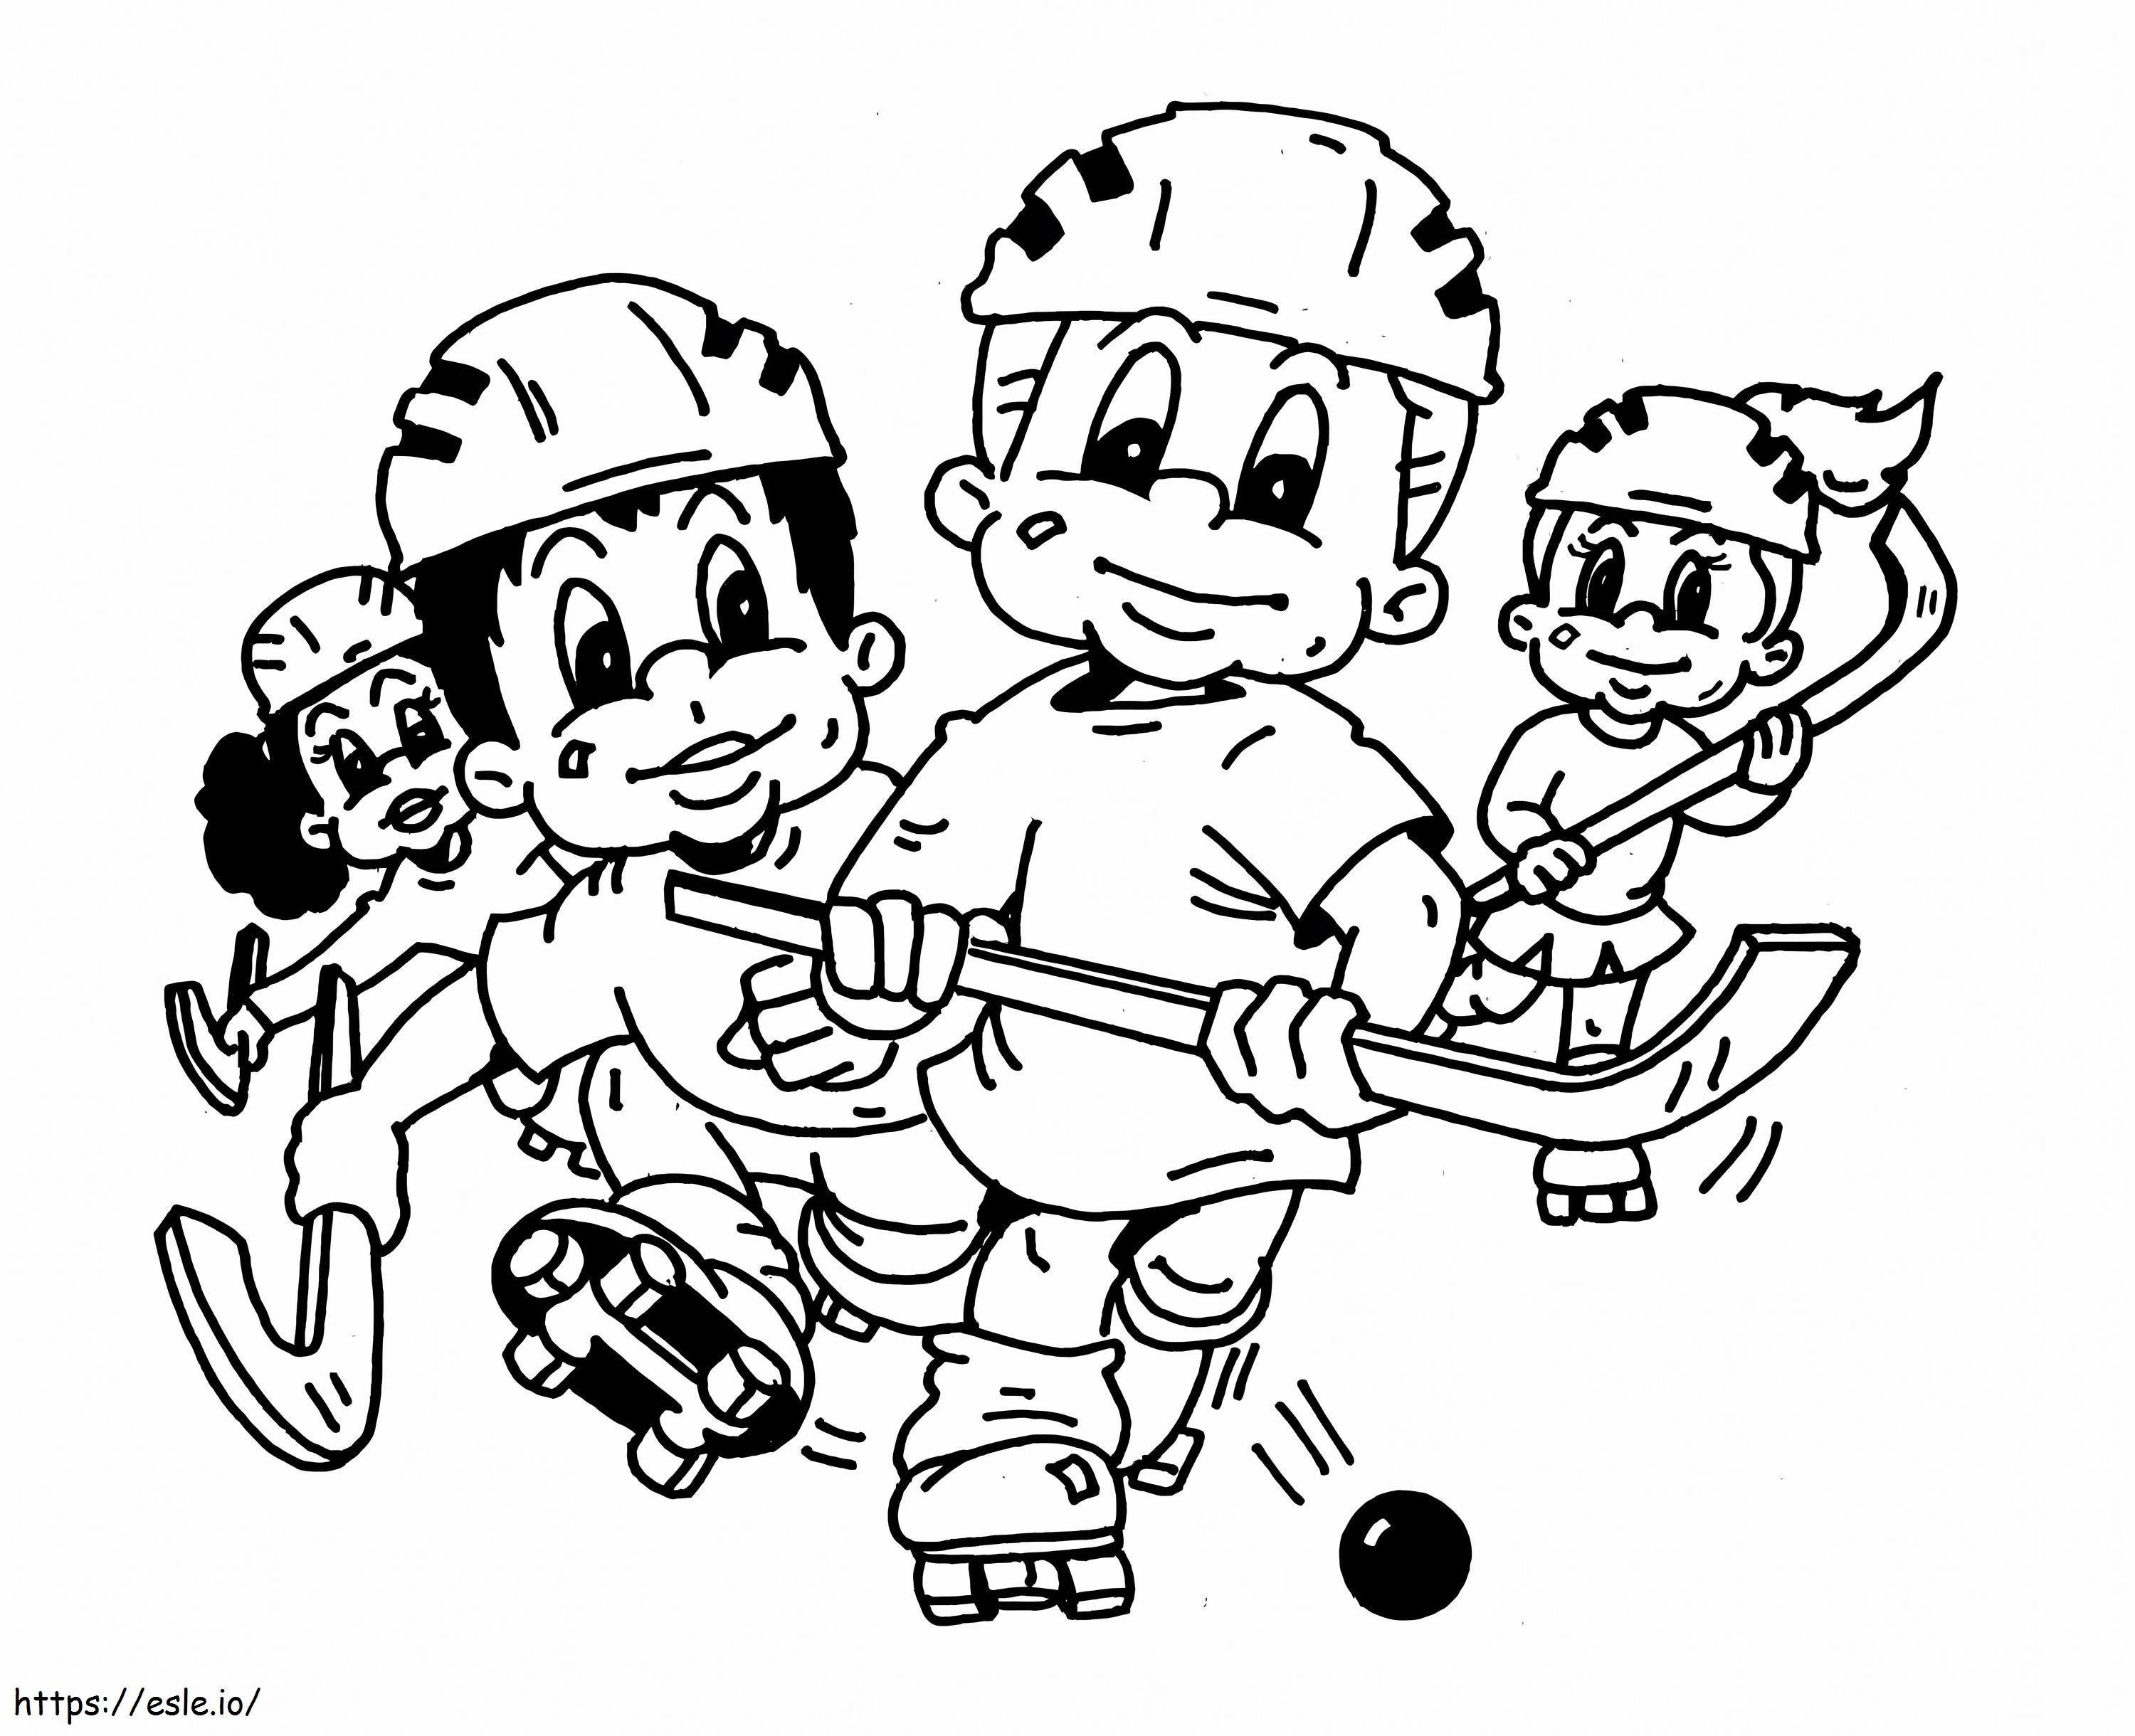 Vier kinderen die hockey spelen kleurplaat kleurplaat